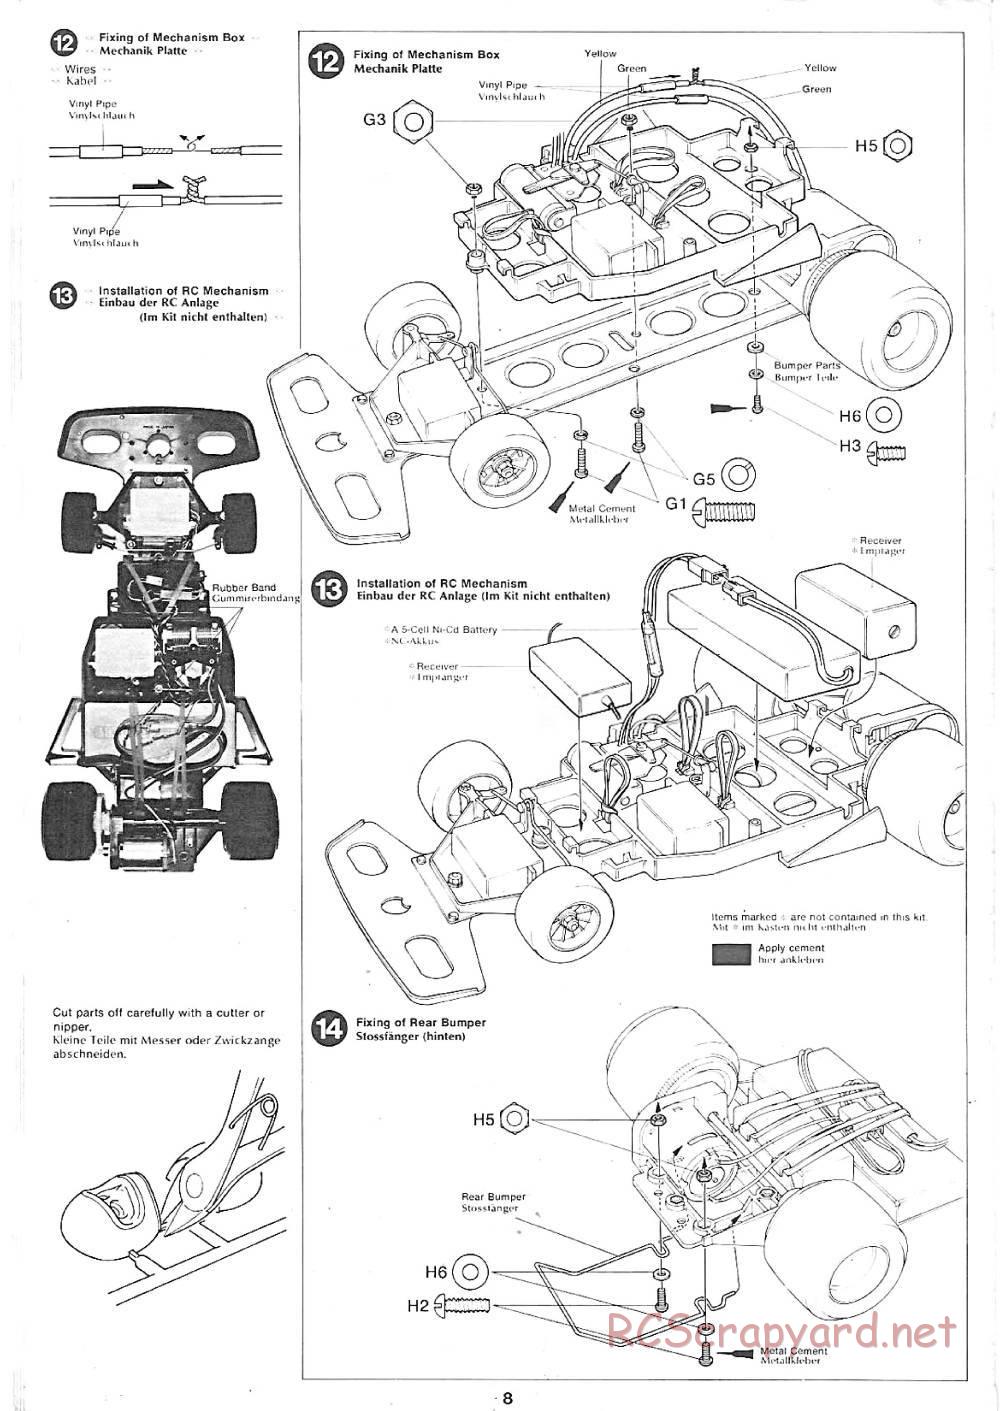 Tamiya - Ralt RT2 Hart 420R (F2) - 58018 - Manual - Page 8